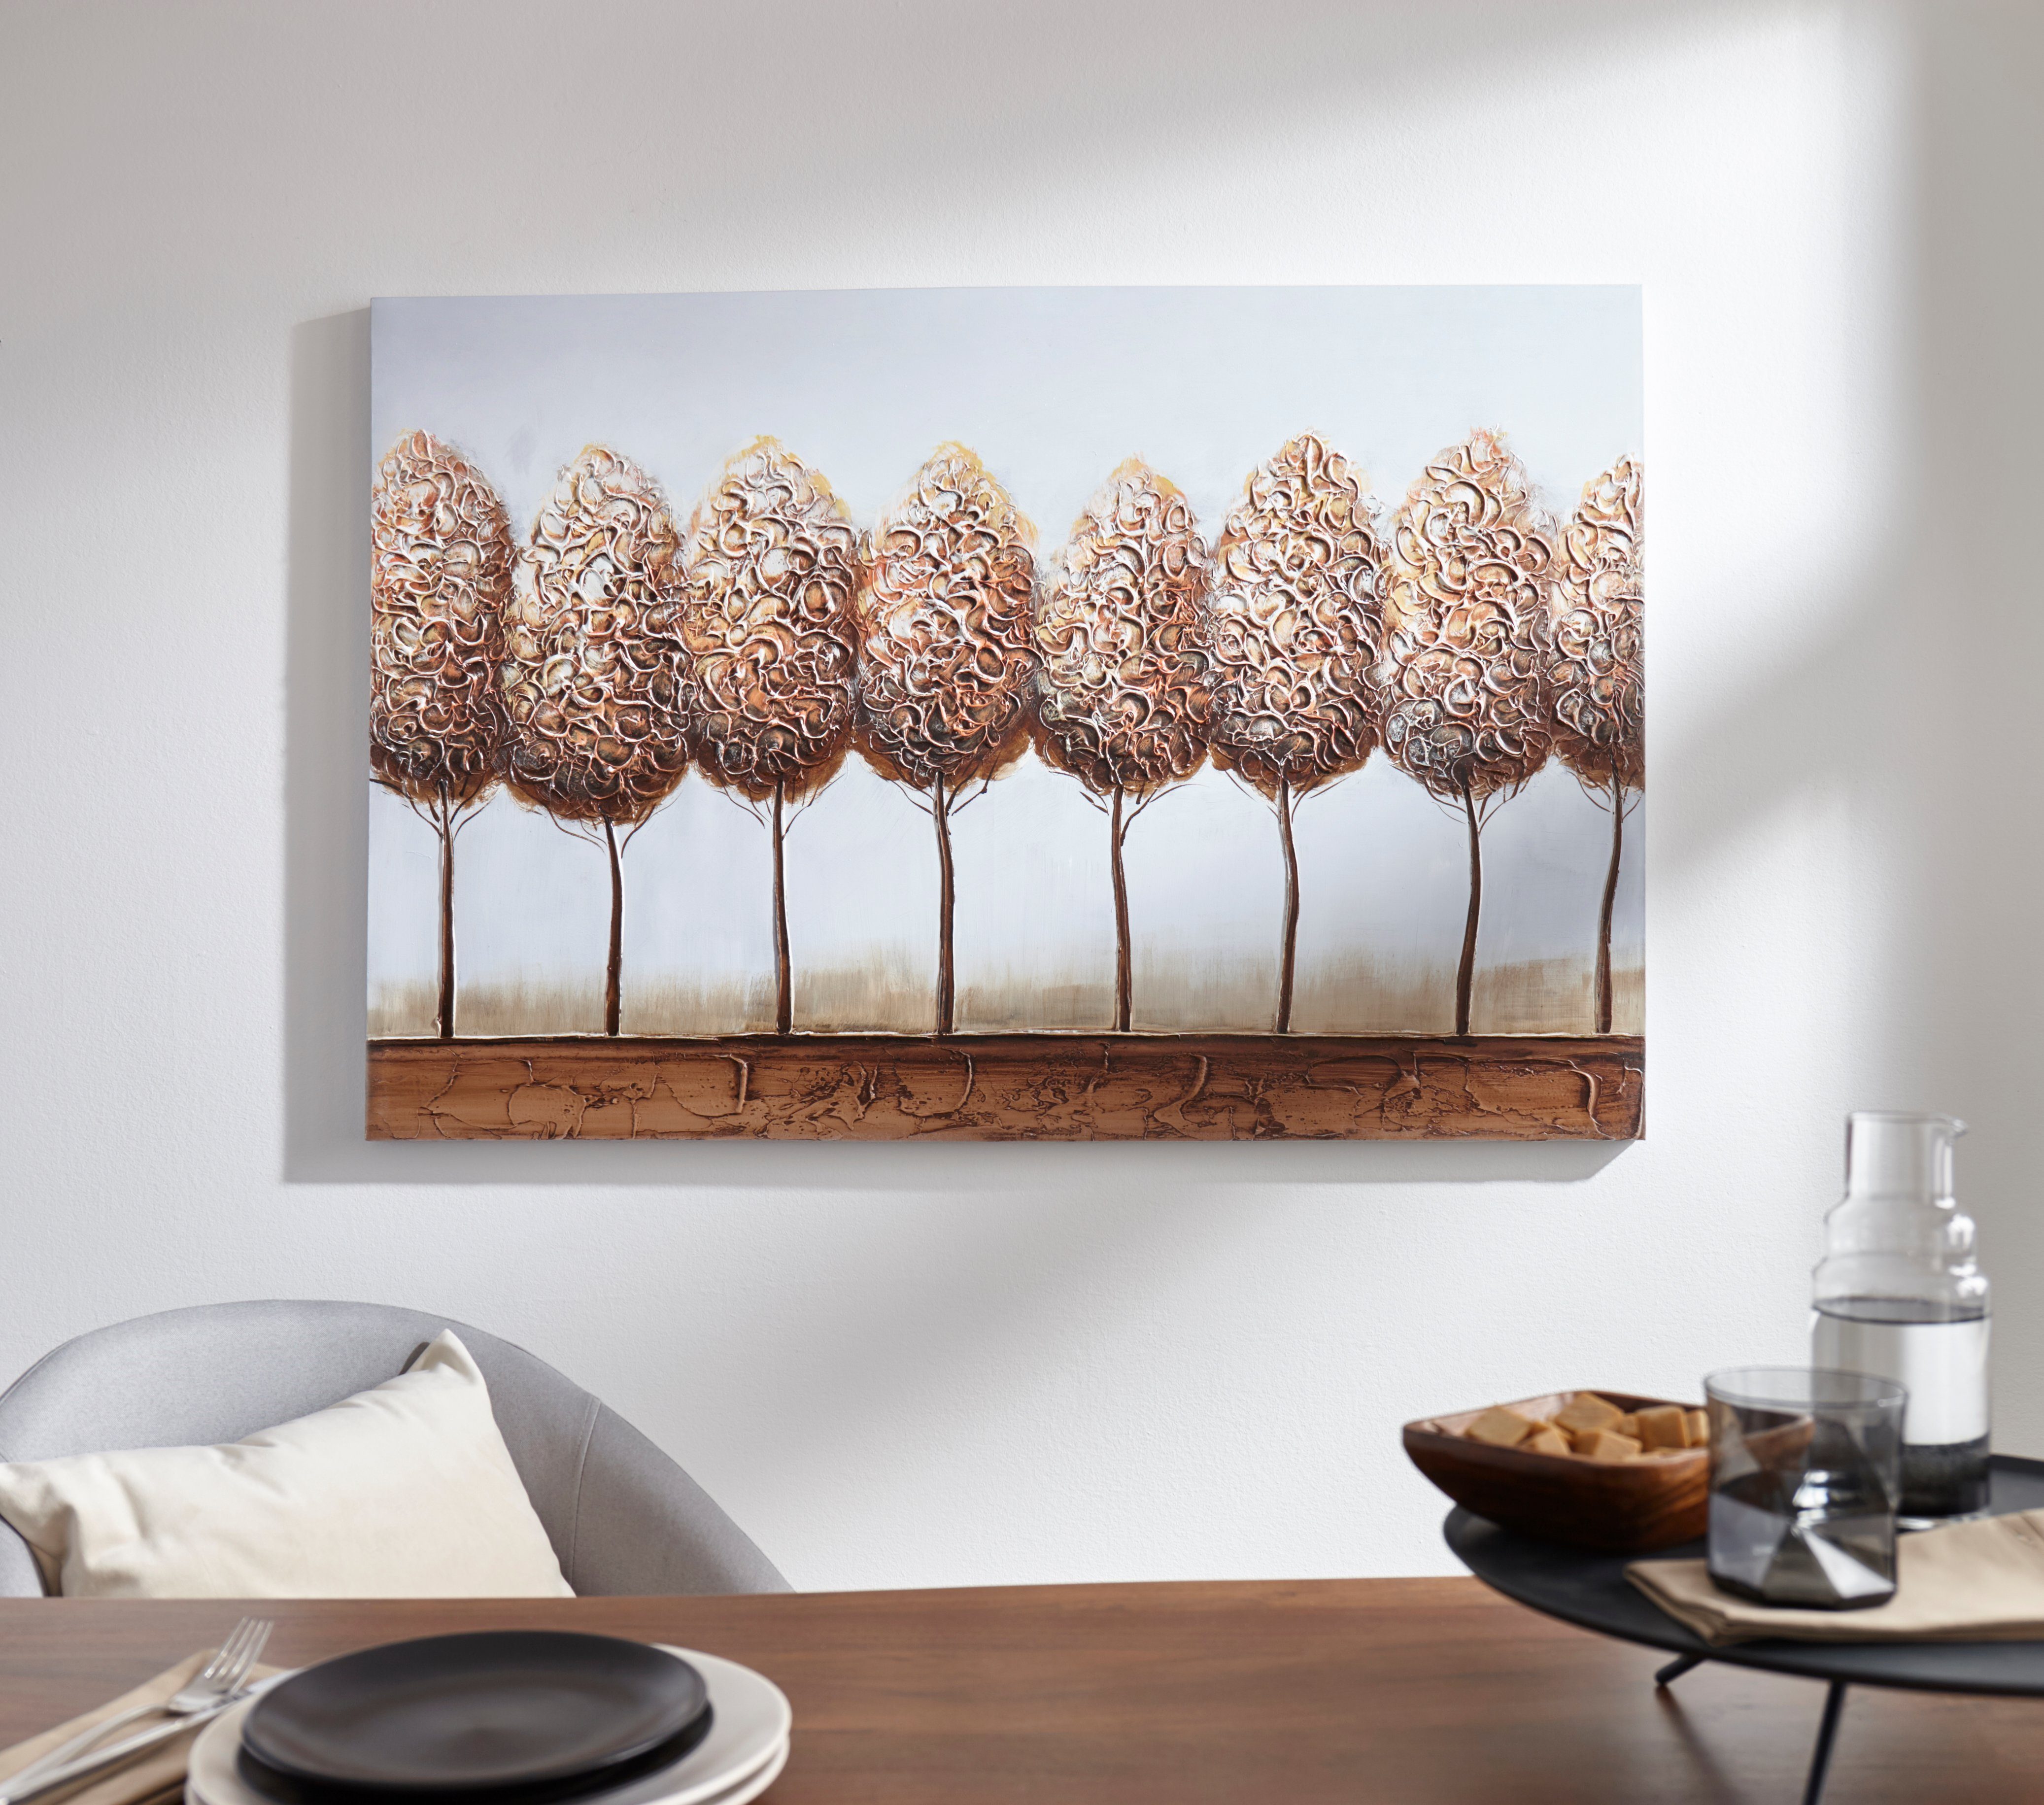 Home Leinwandbild Trees, 120x80 cm, Motiv Bäume, Wohnzimmer affaire